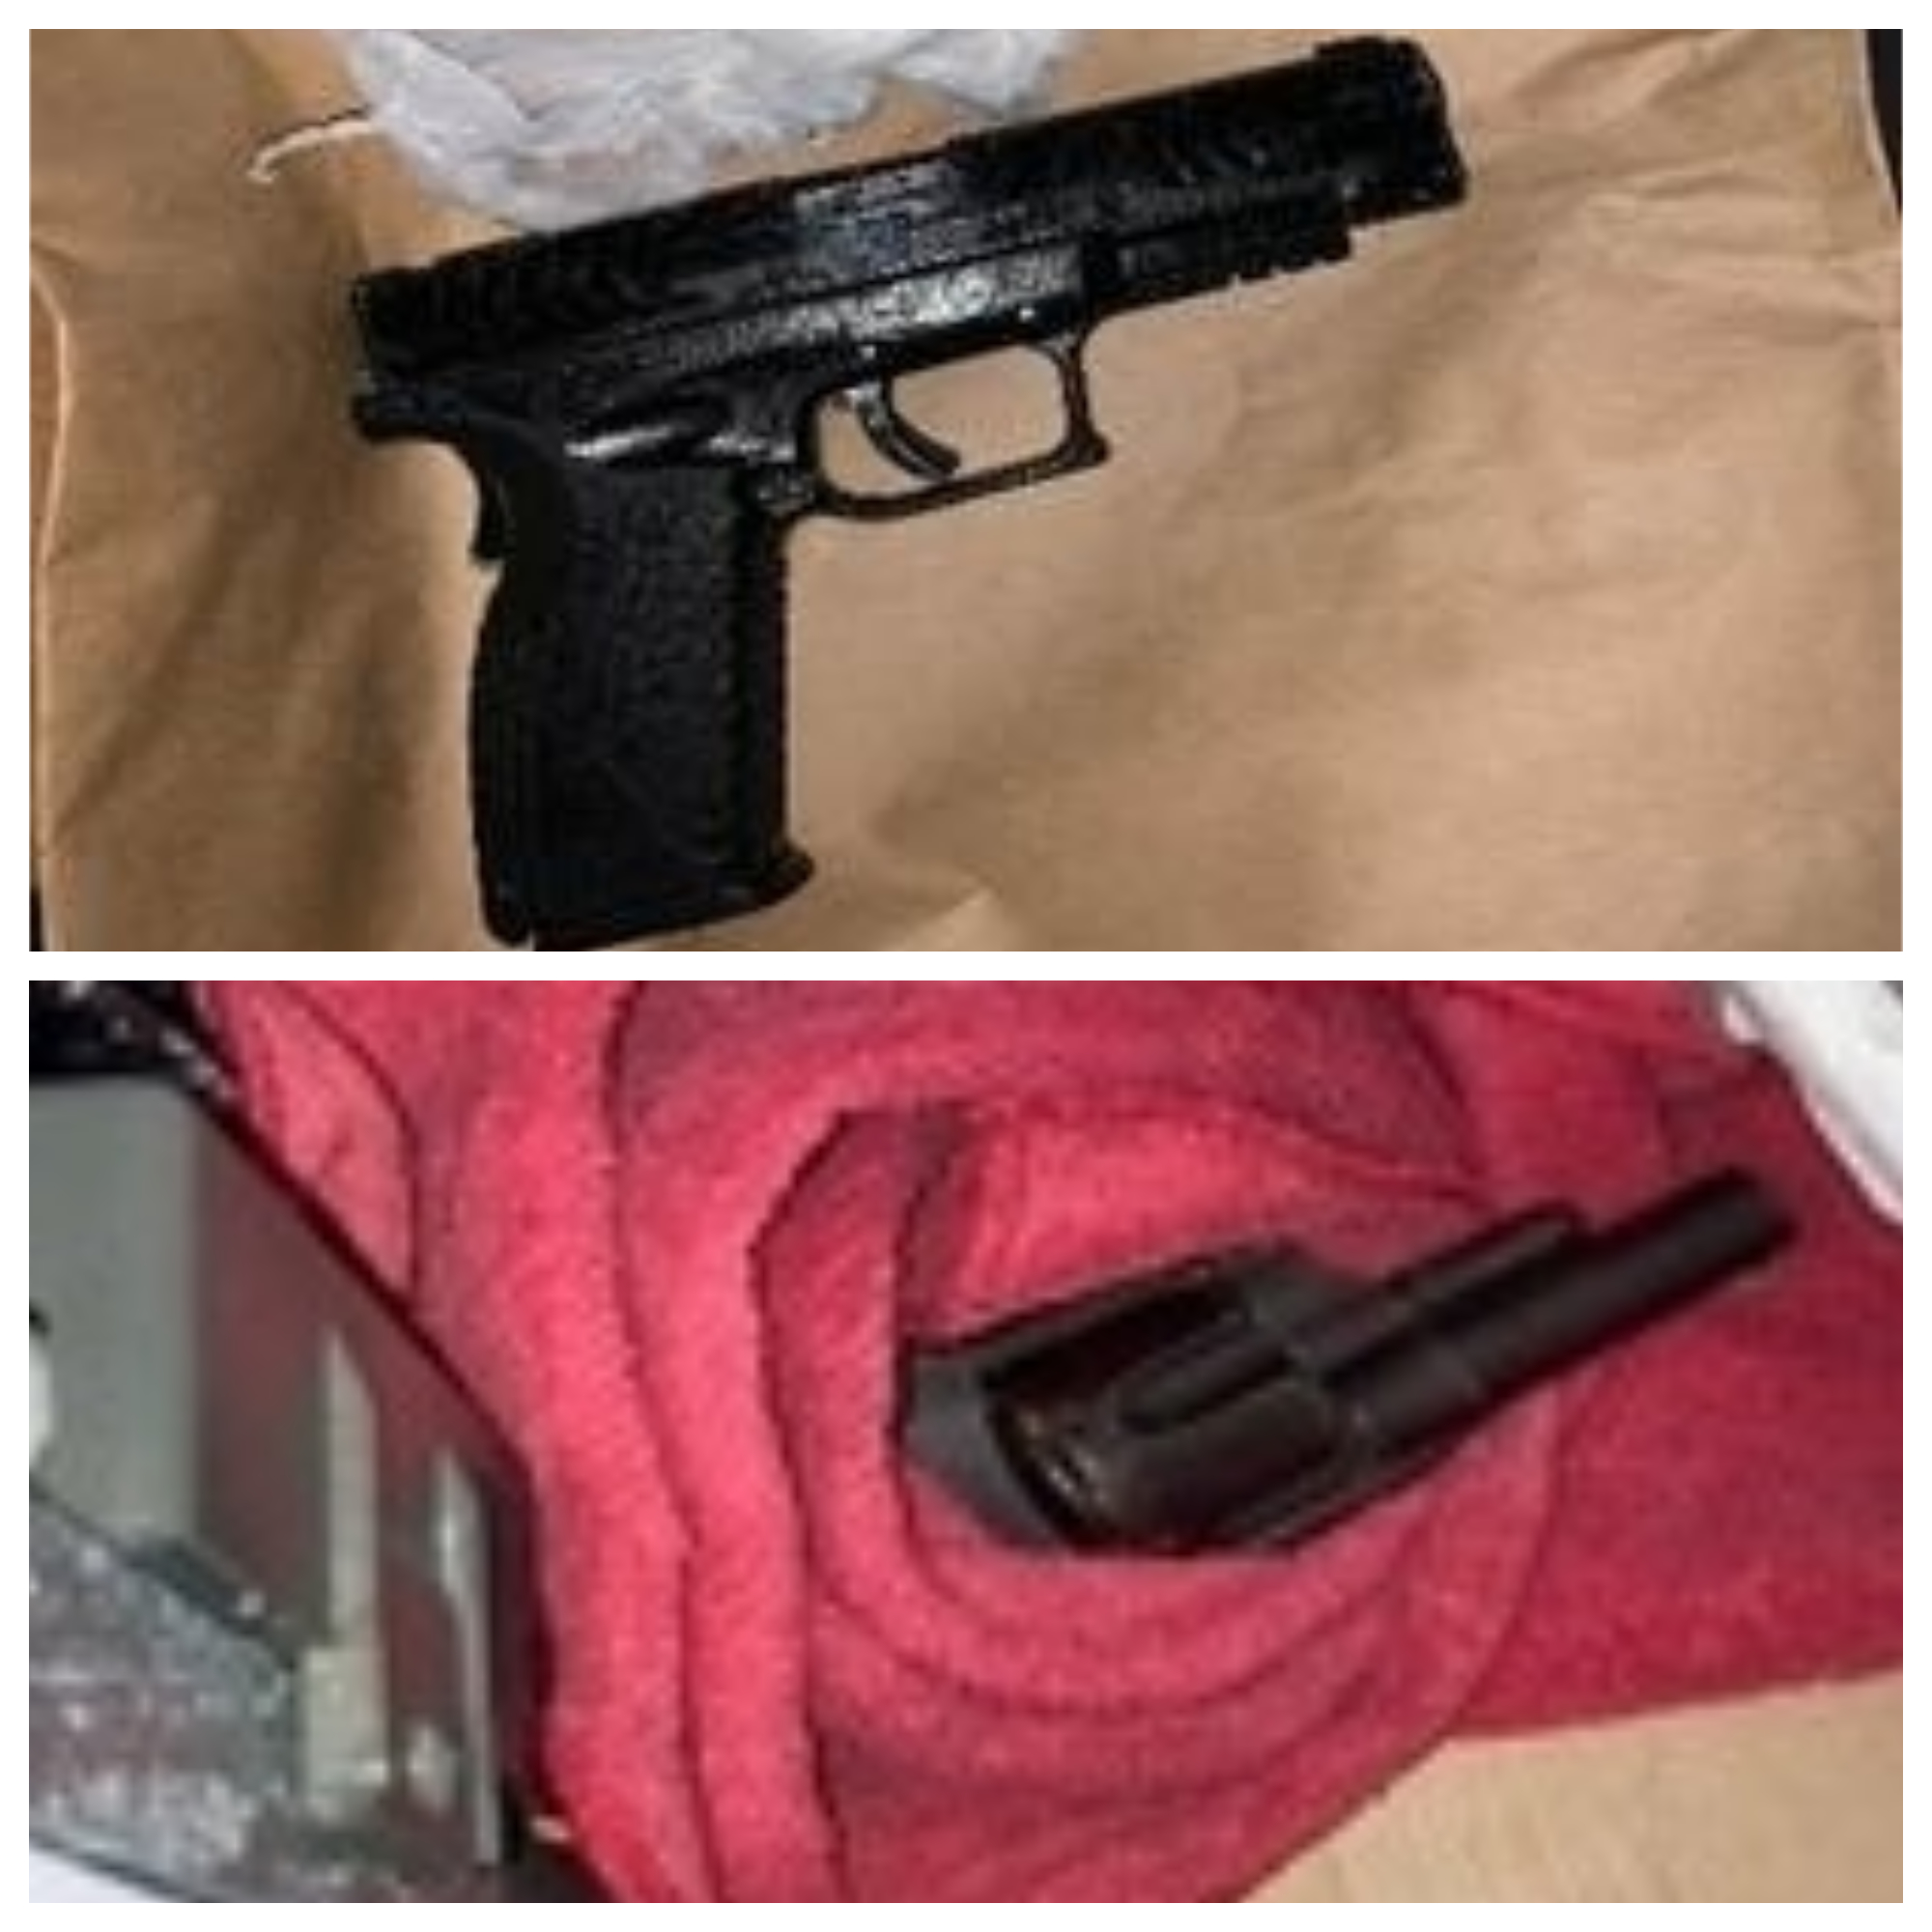 Handguns found during recent anti-gun crime activity by the Metropolitan Police